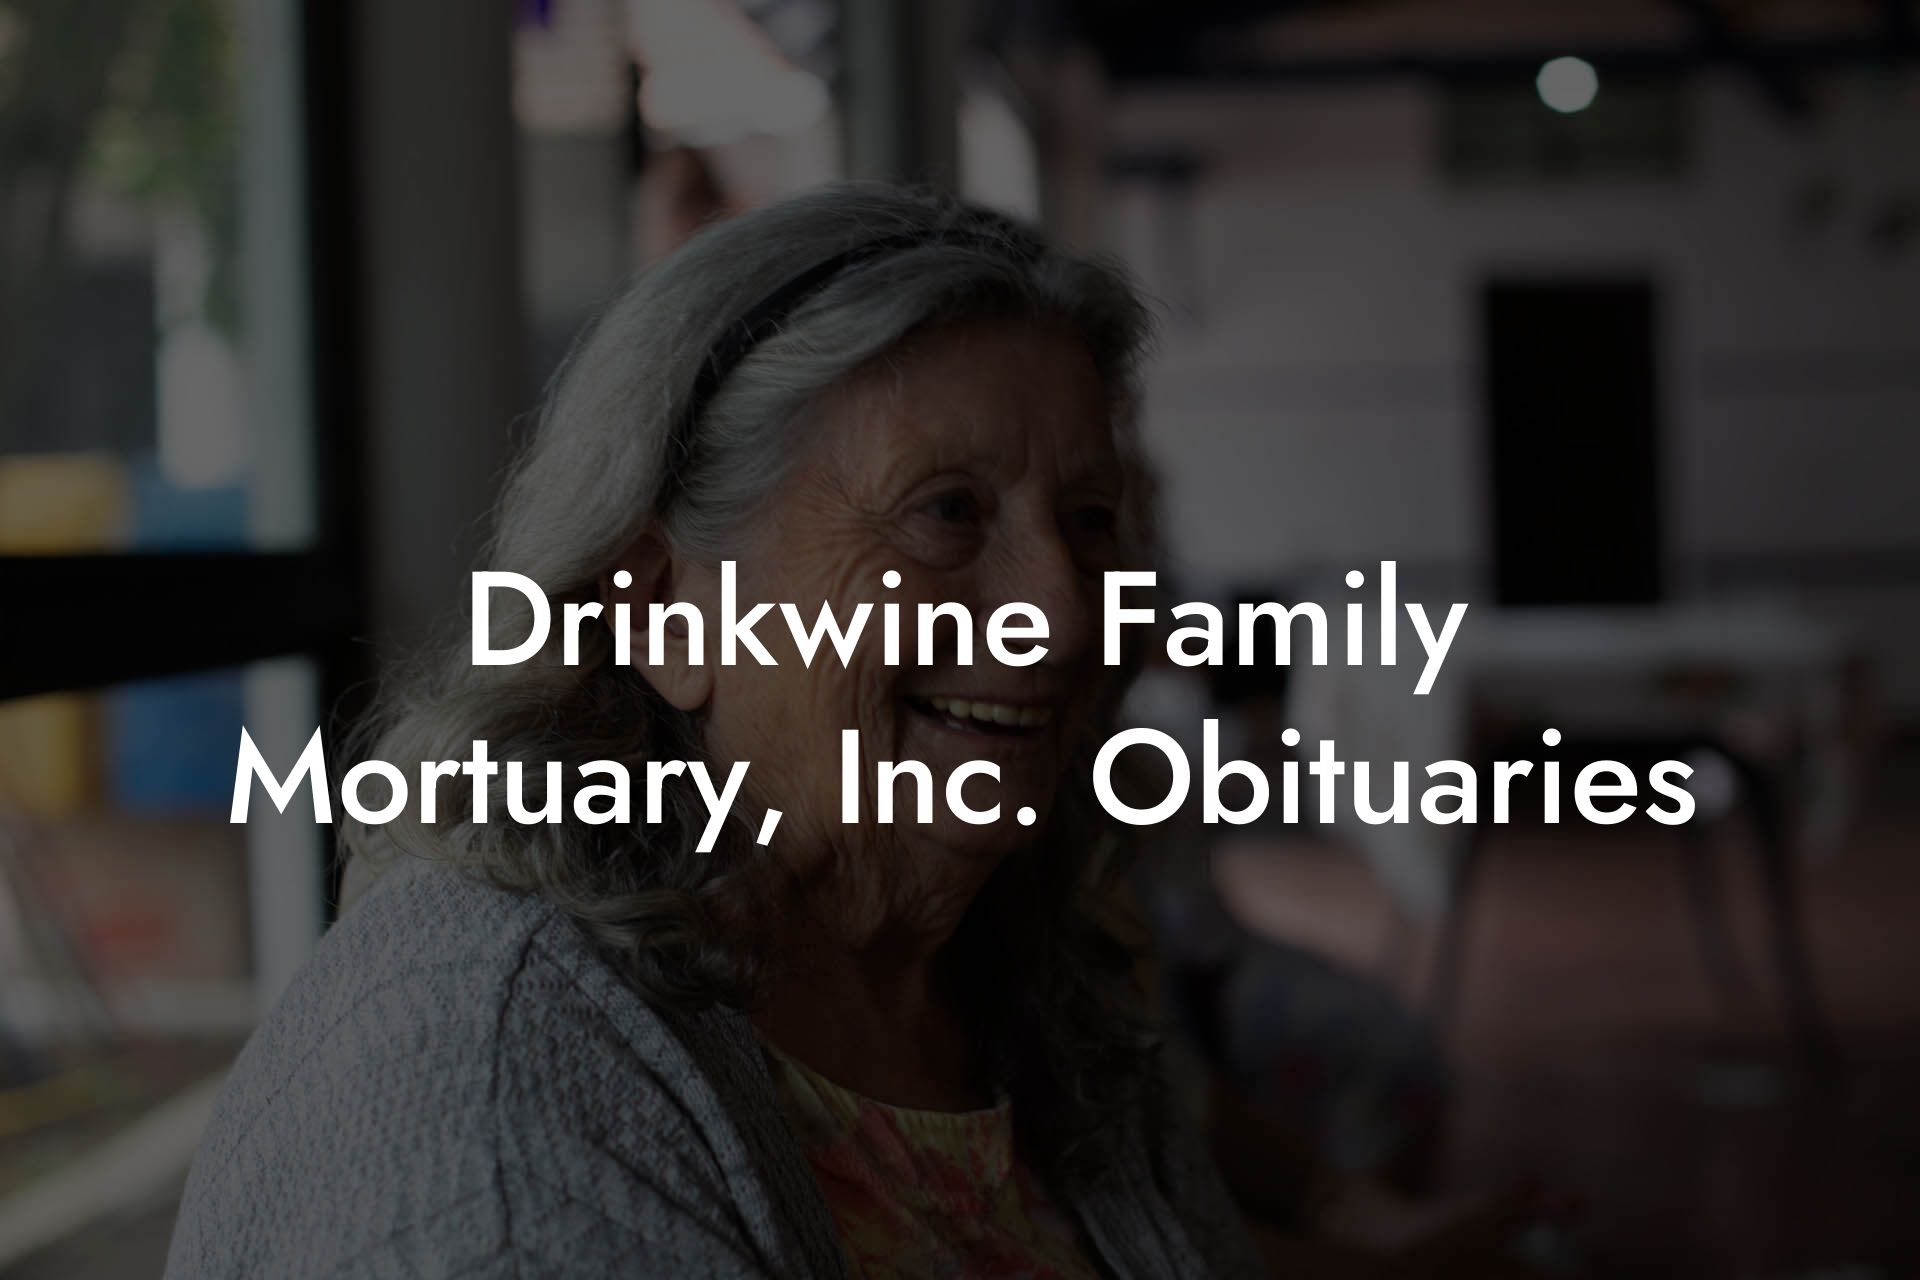 Drinkwine Family Mortuary, Inc. Obituaries